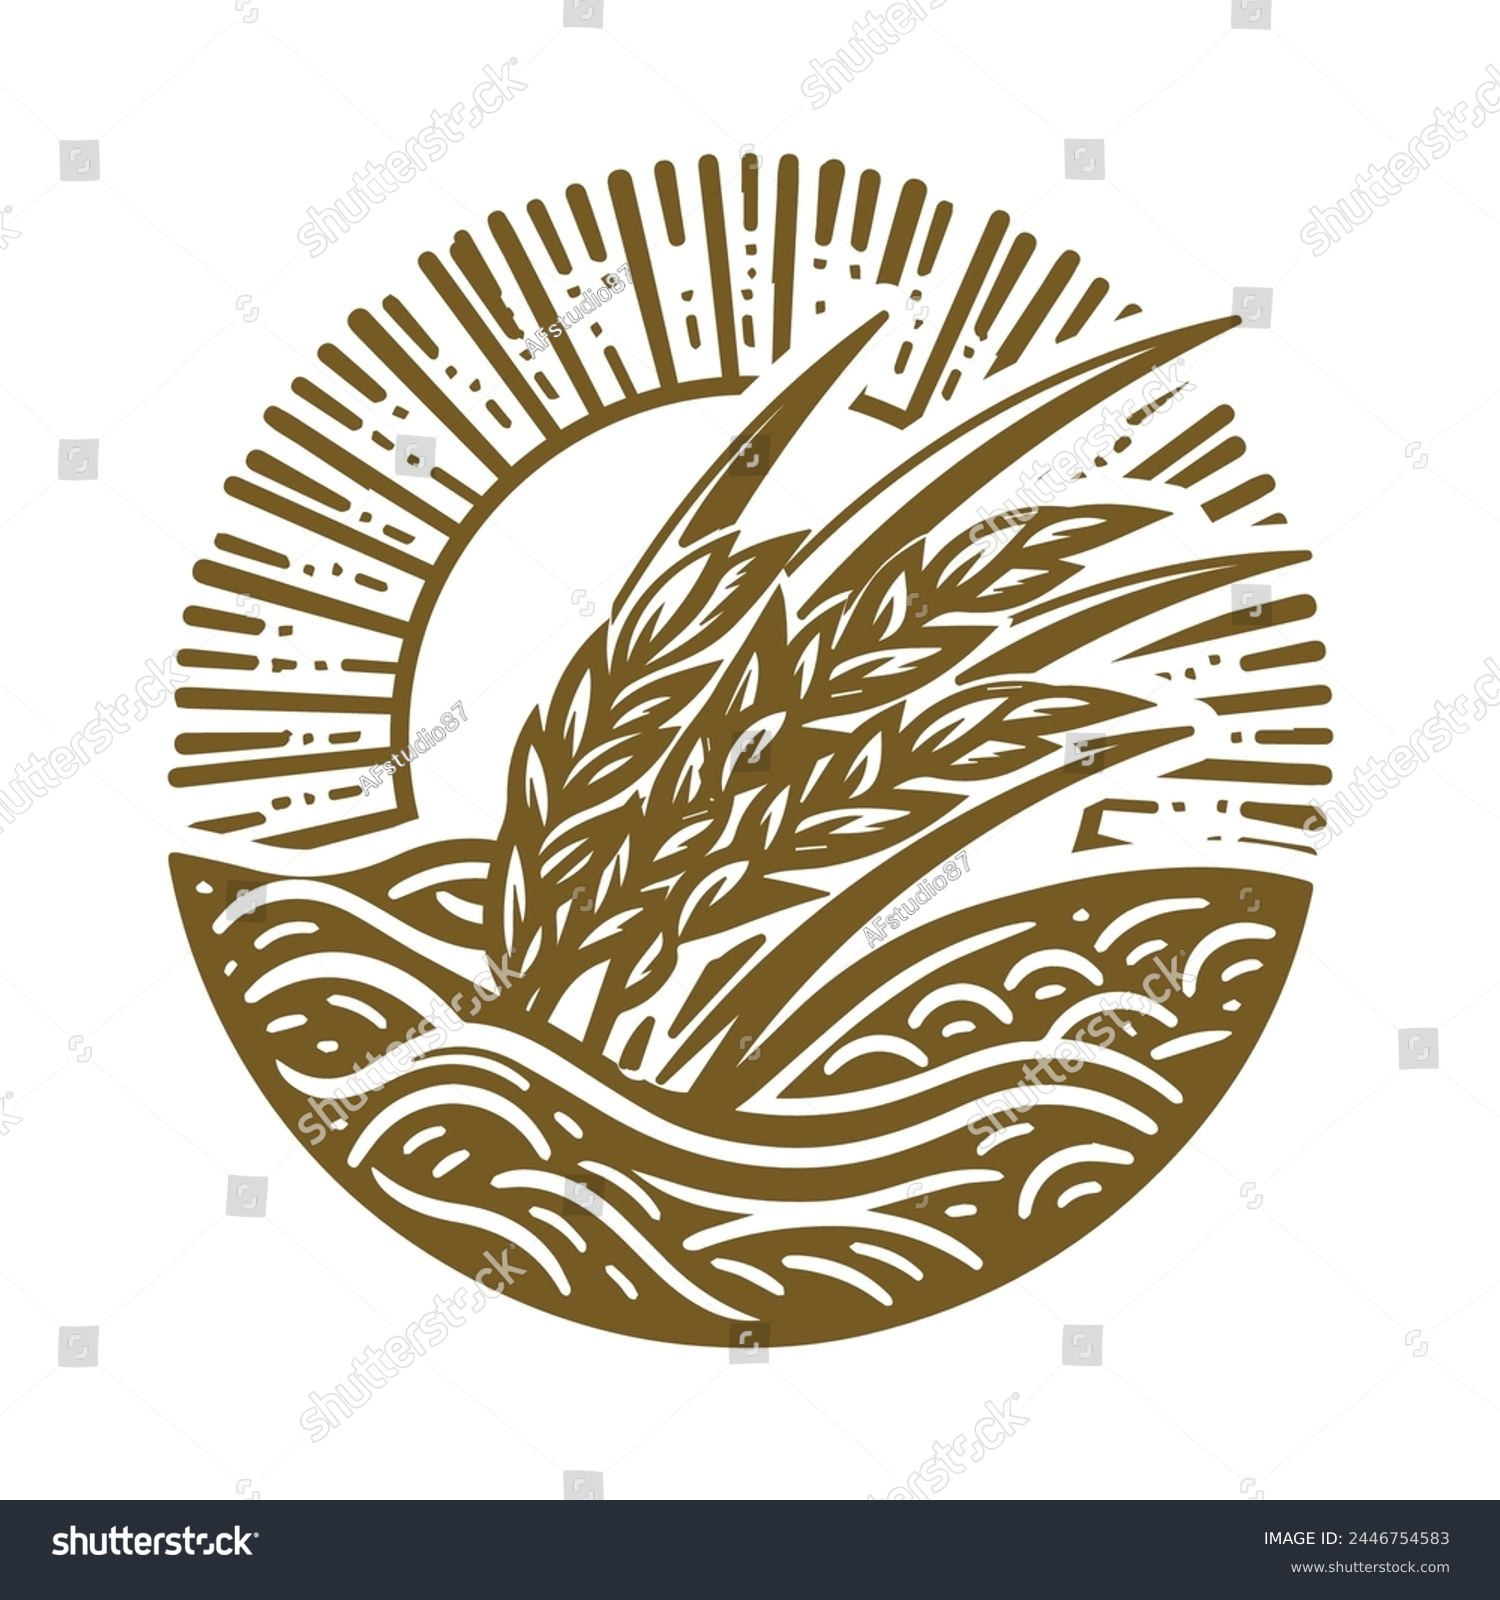 SVG of Golden Circular Sun with Wheat Rice Land Farm Symbol Illustration Vector svg